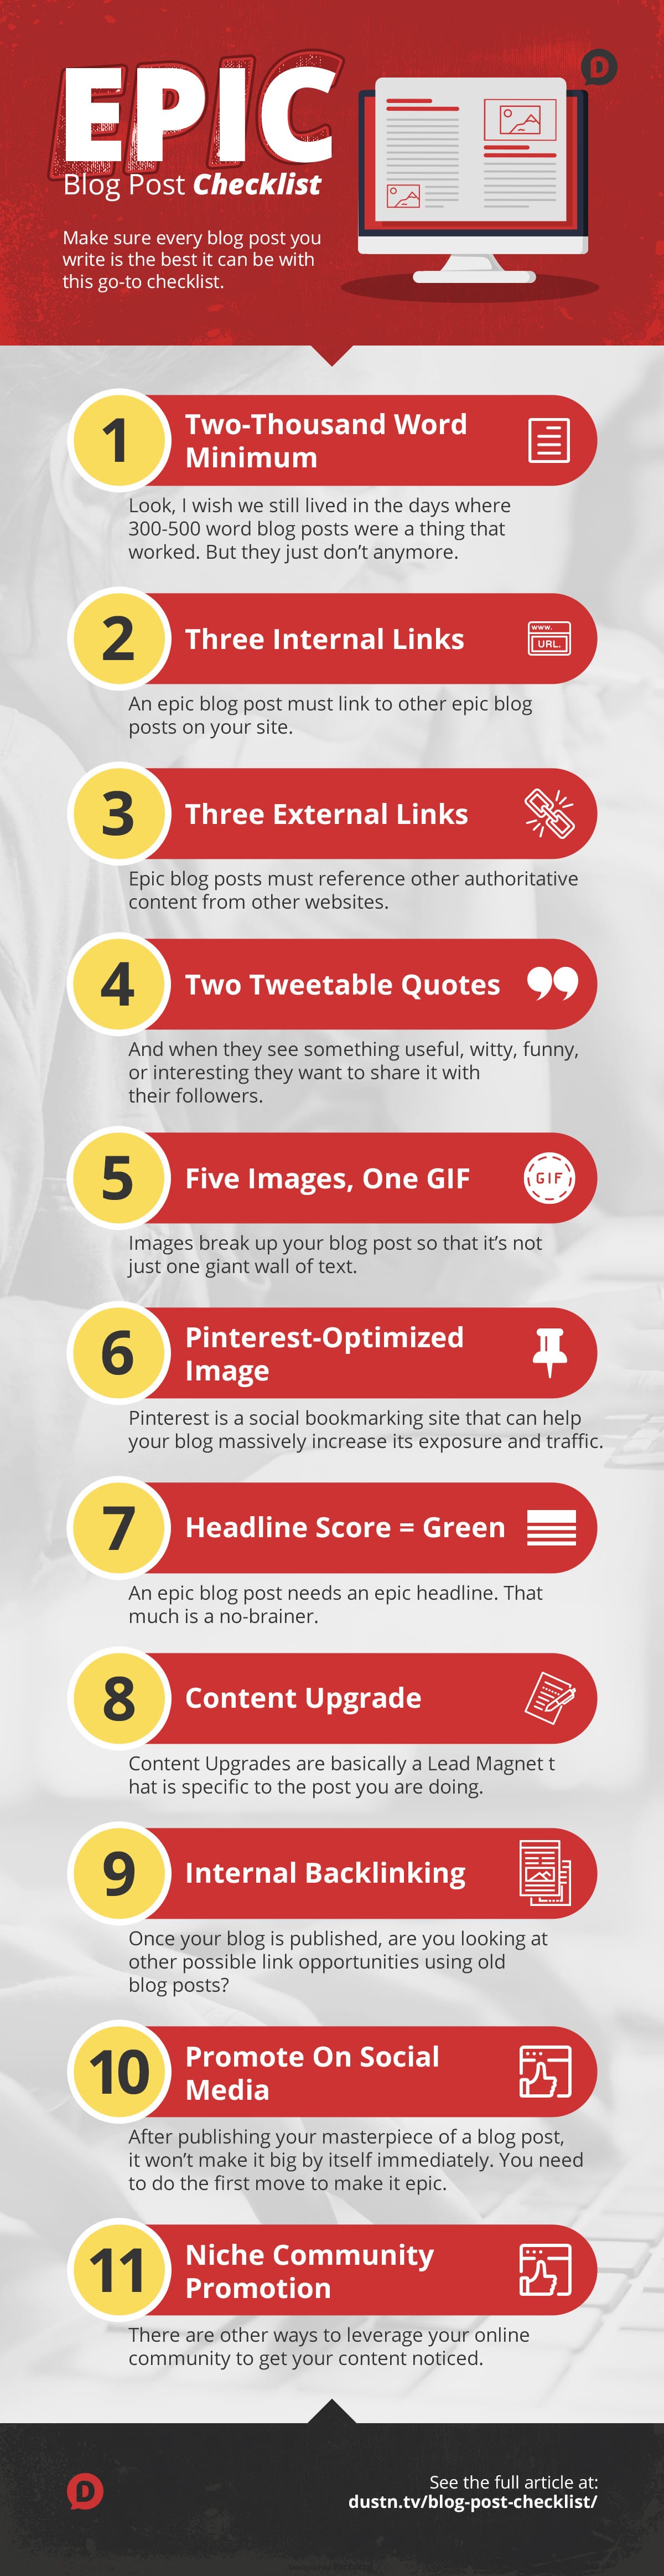 Blog post checklist infographic